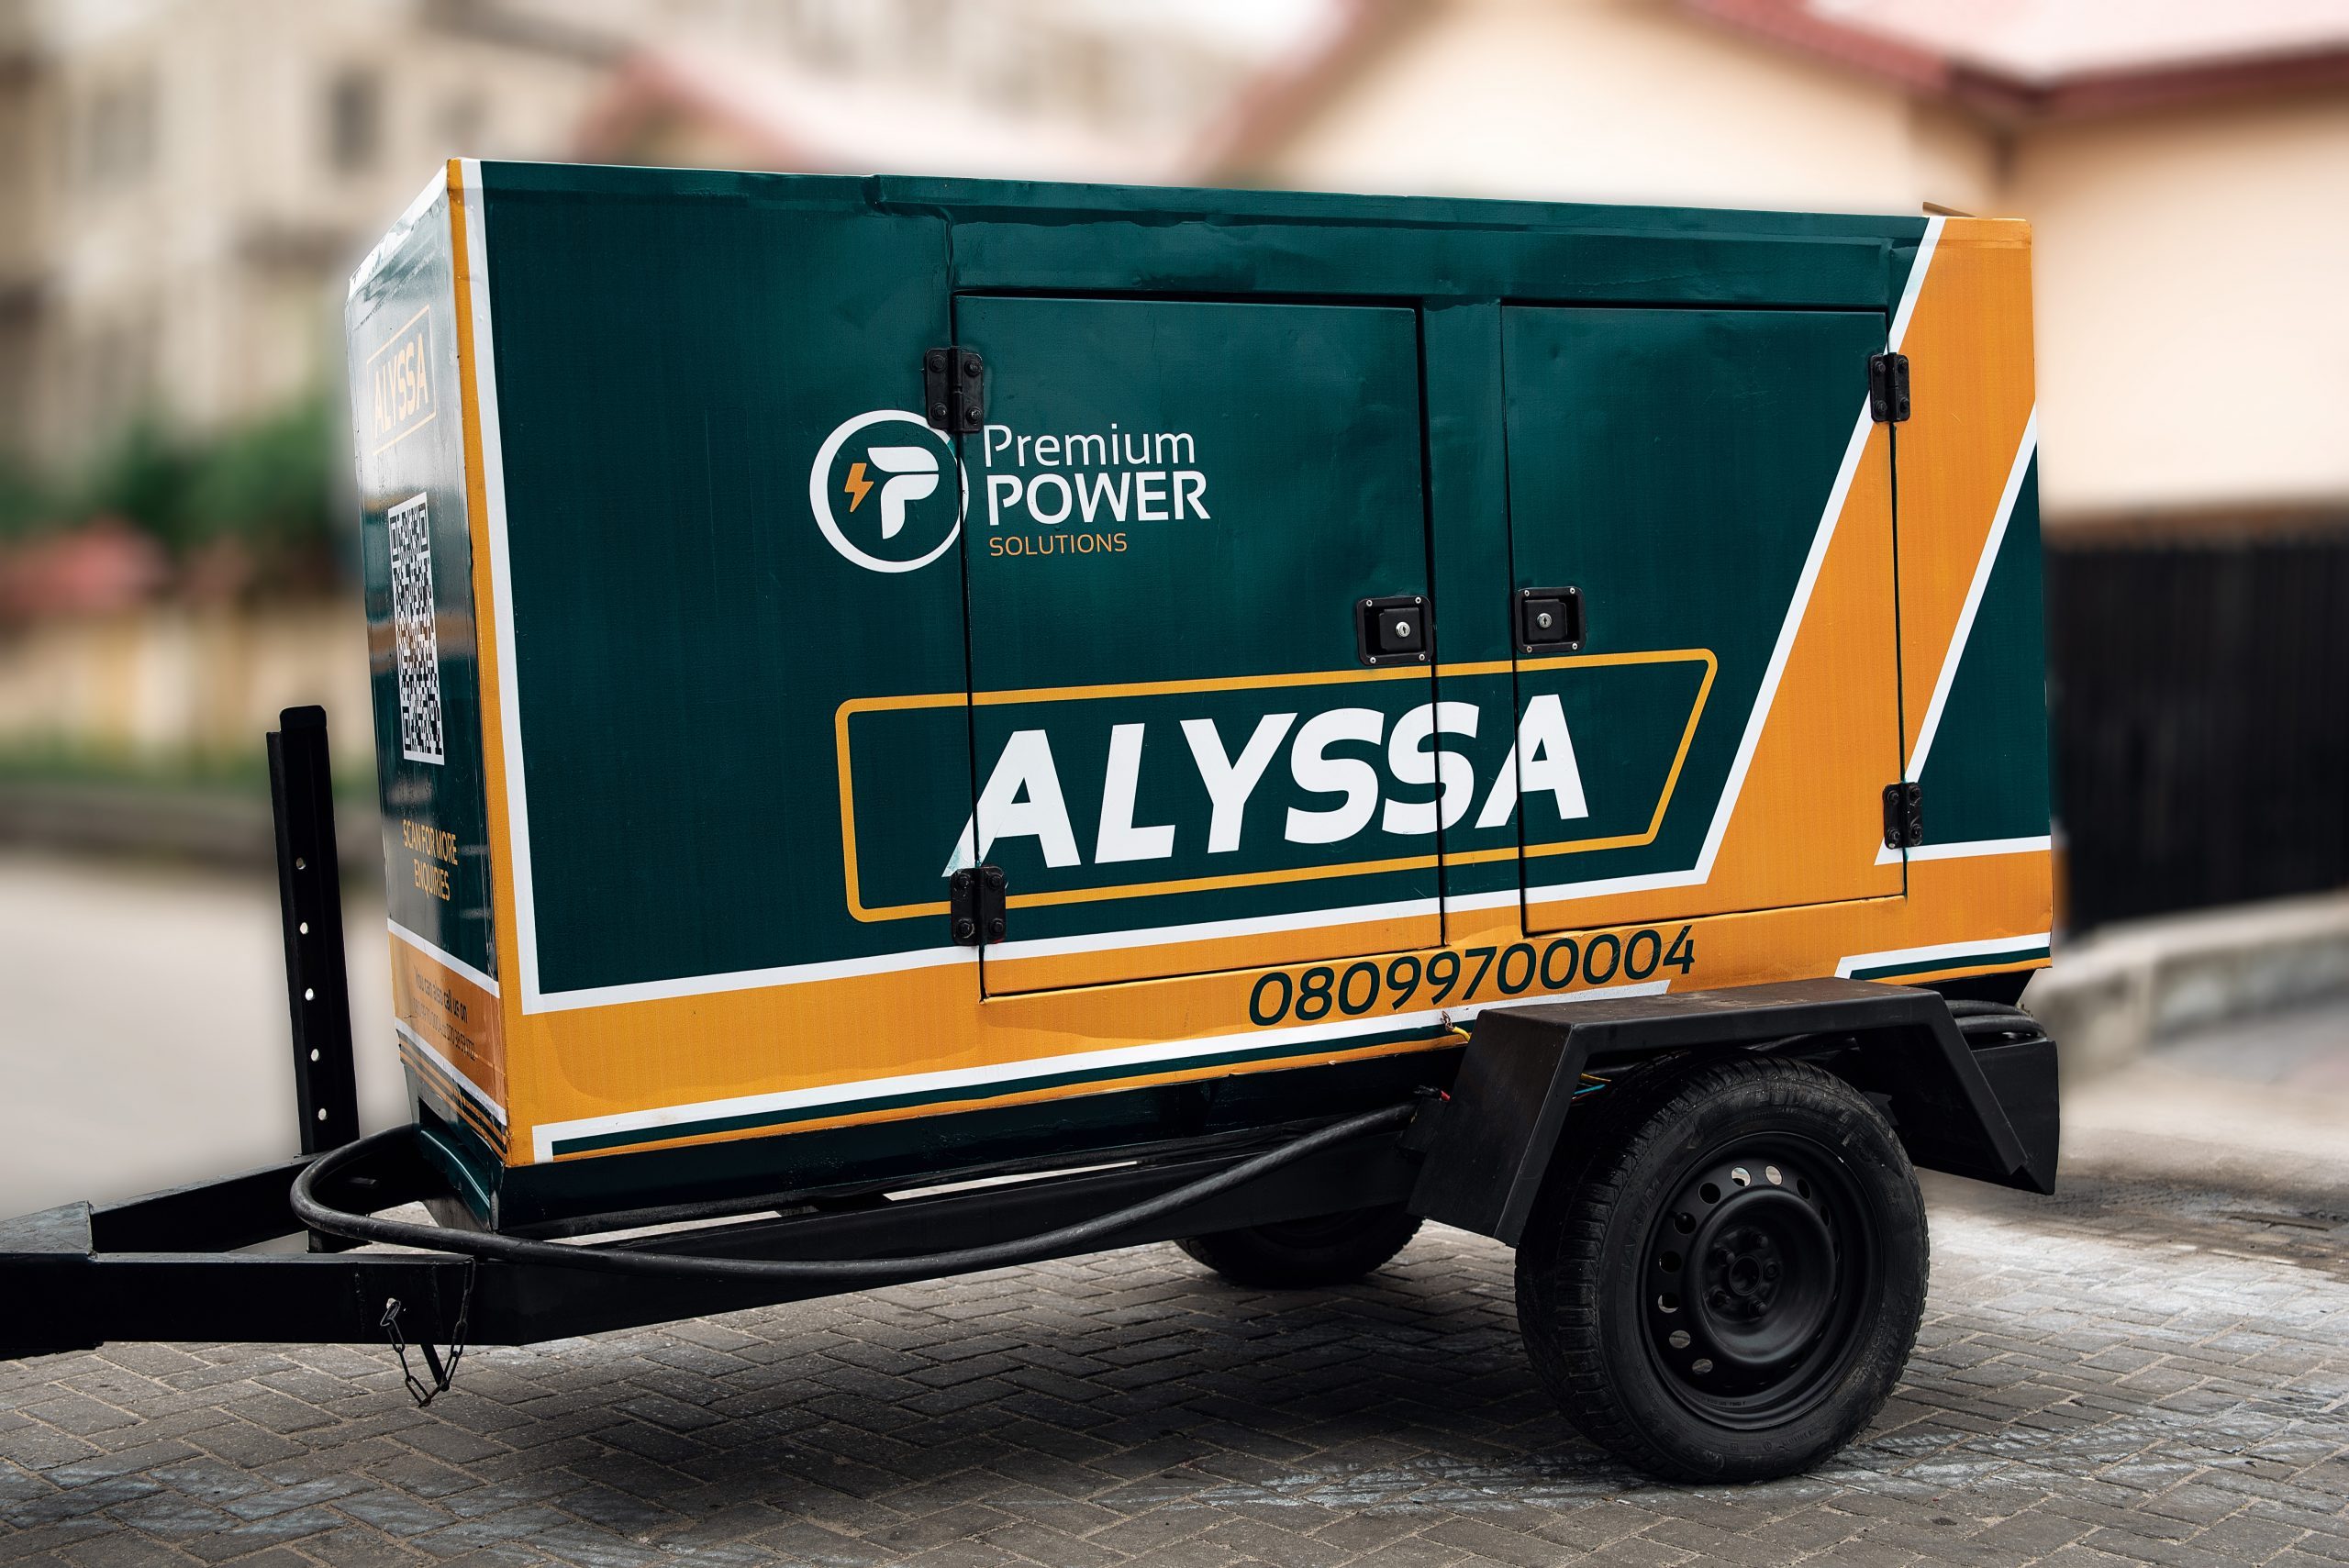 Alyssa diesel generator